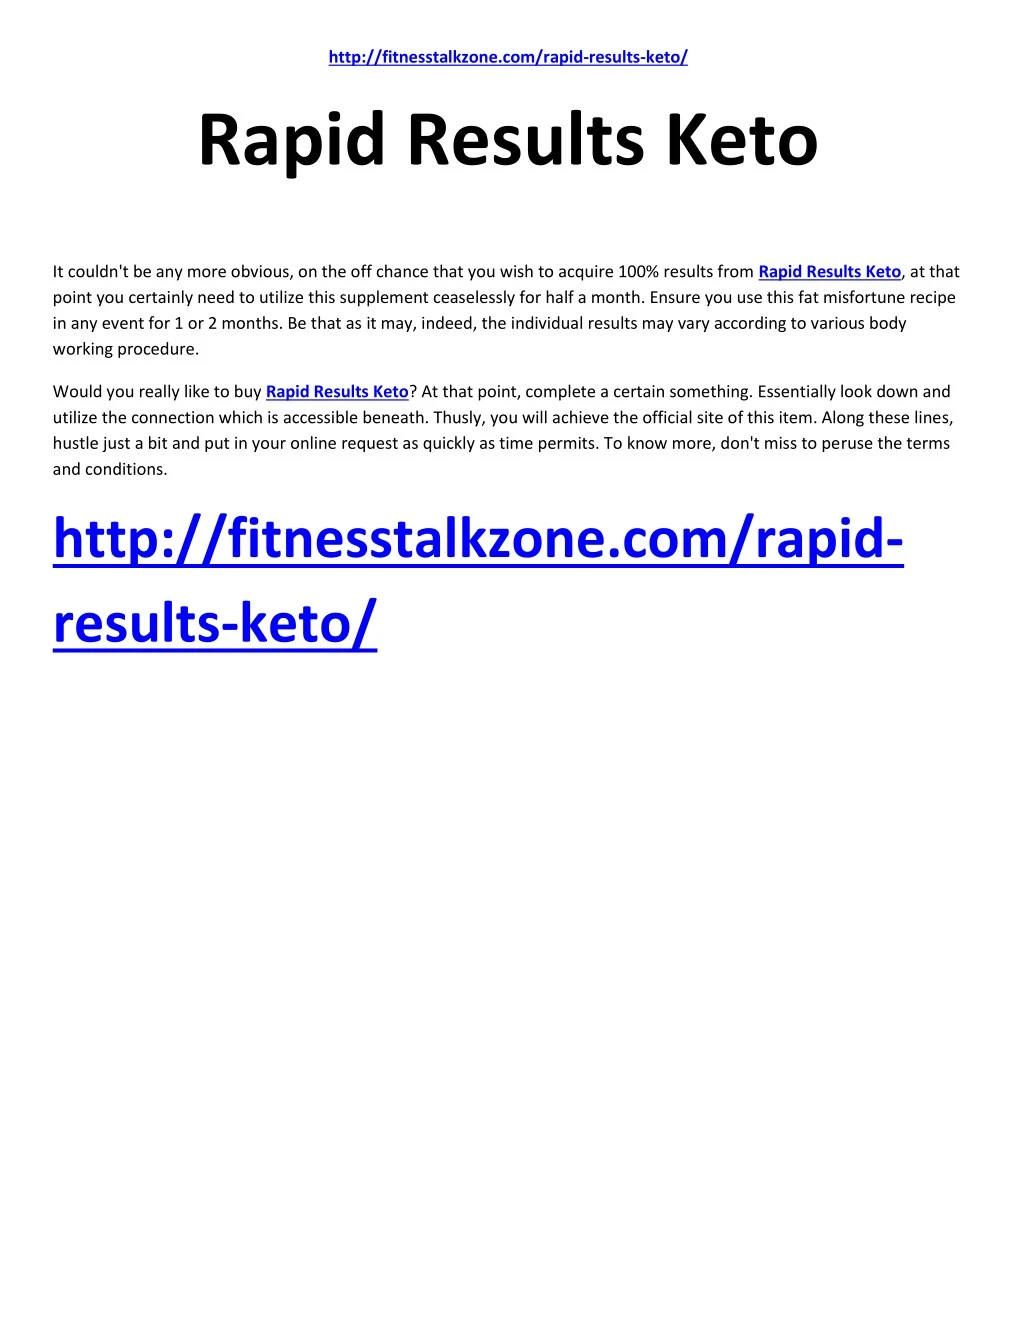 http fitnesstalkzone com rapid results keto rapid